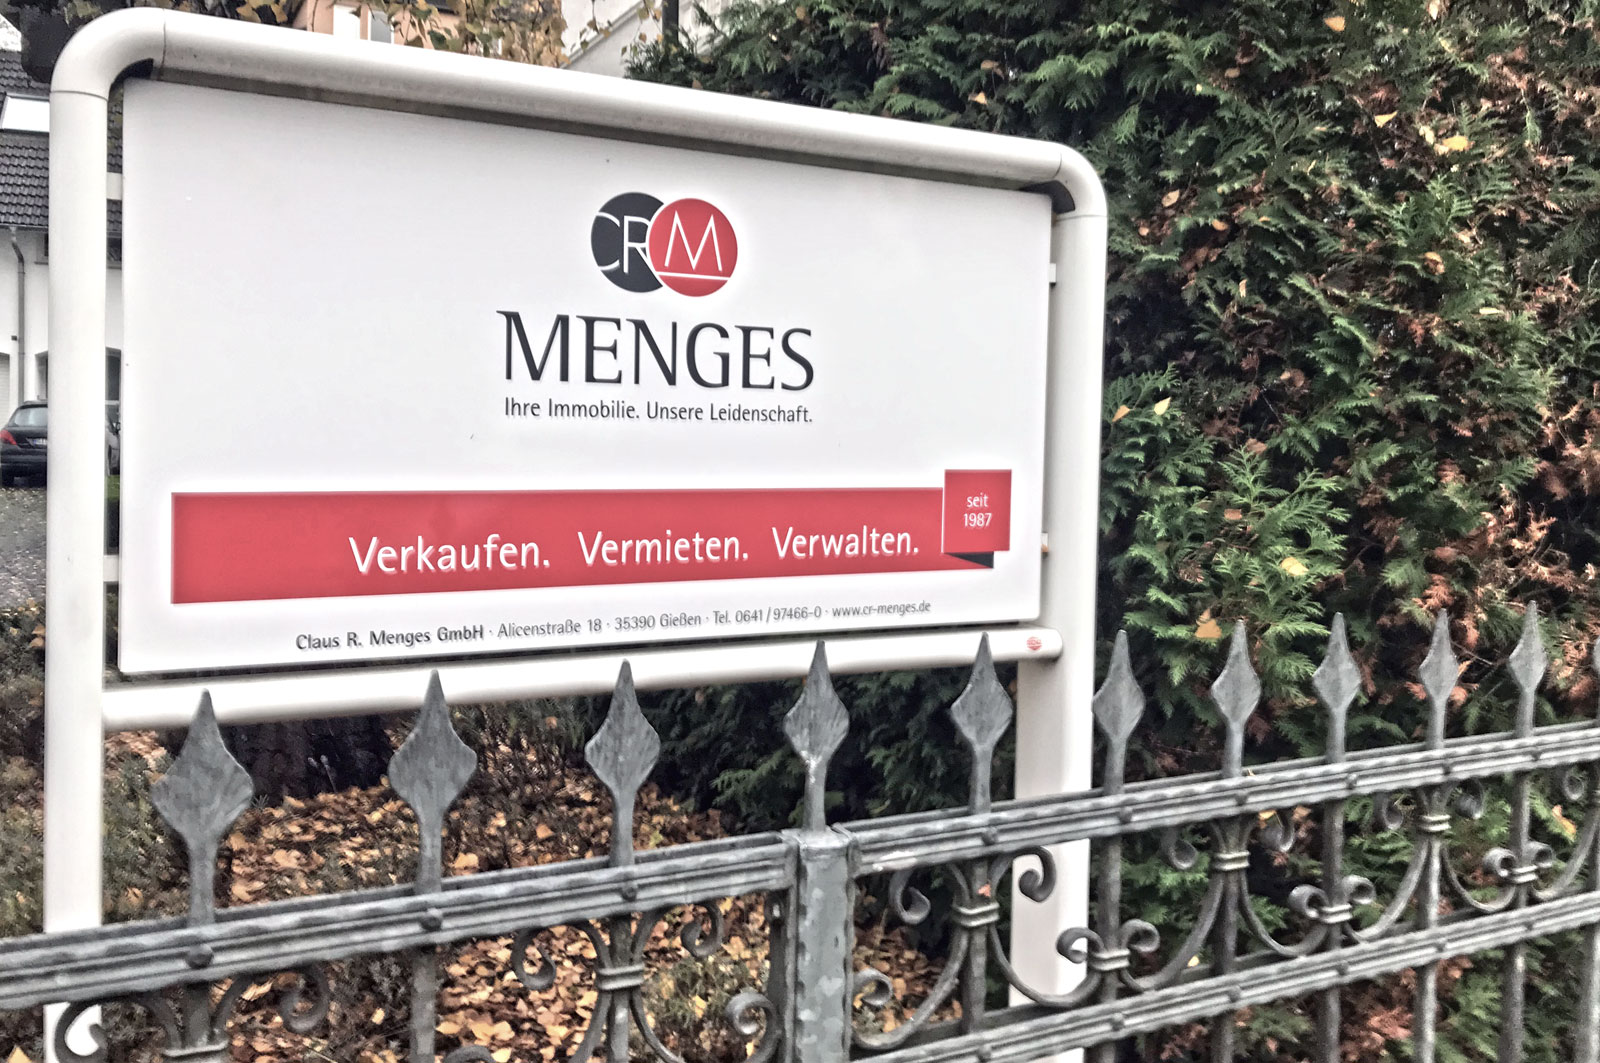 CR Menges GmbH